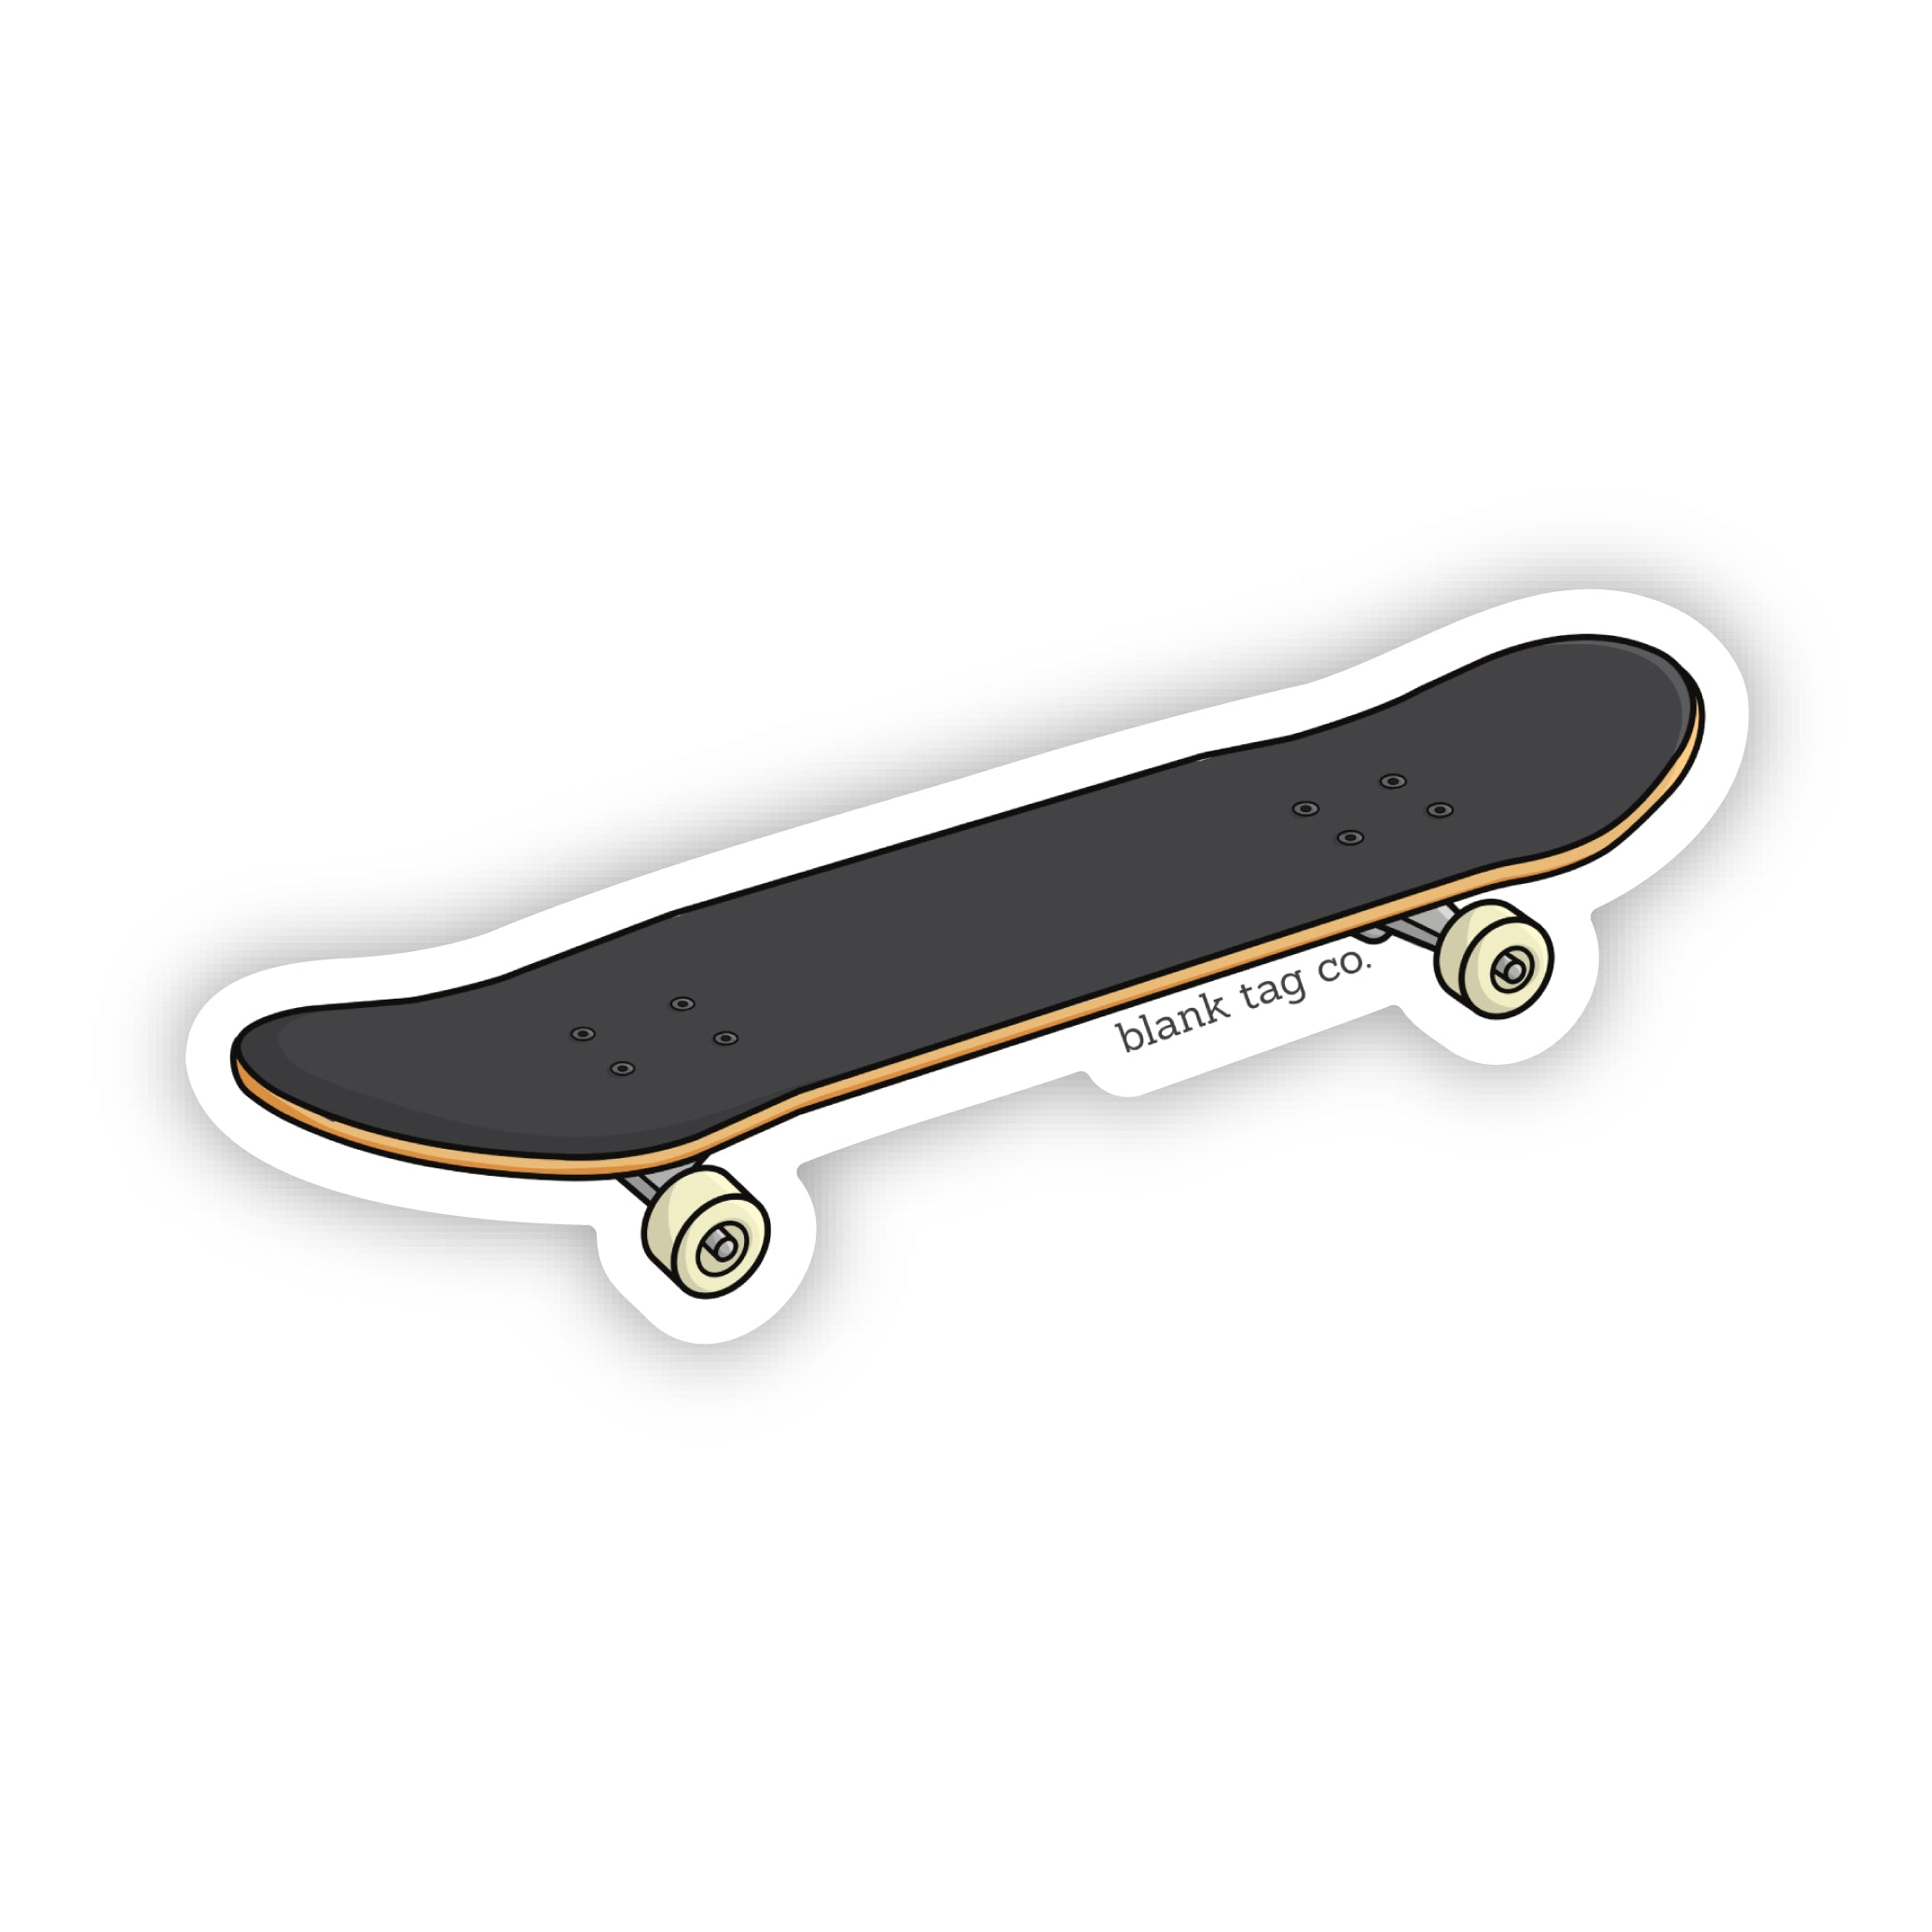 The Skateboard Sticker